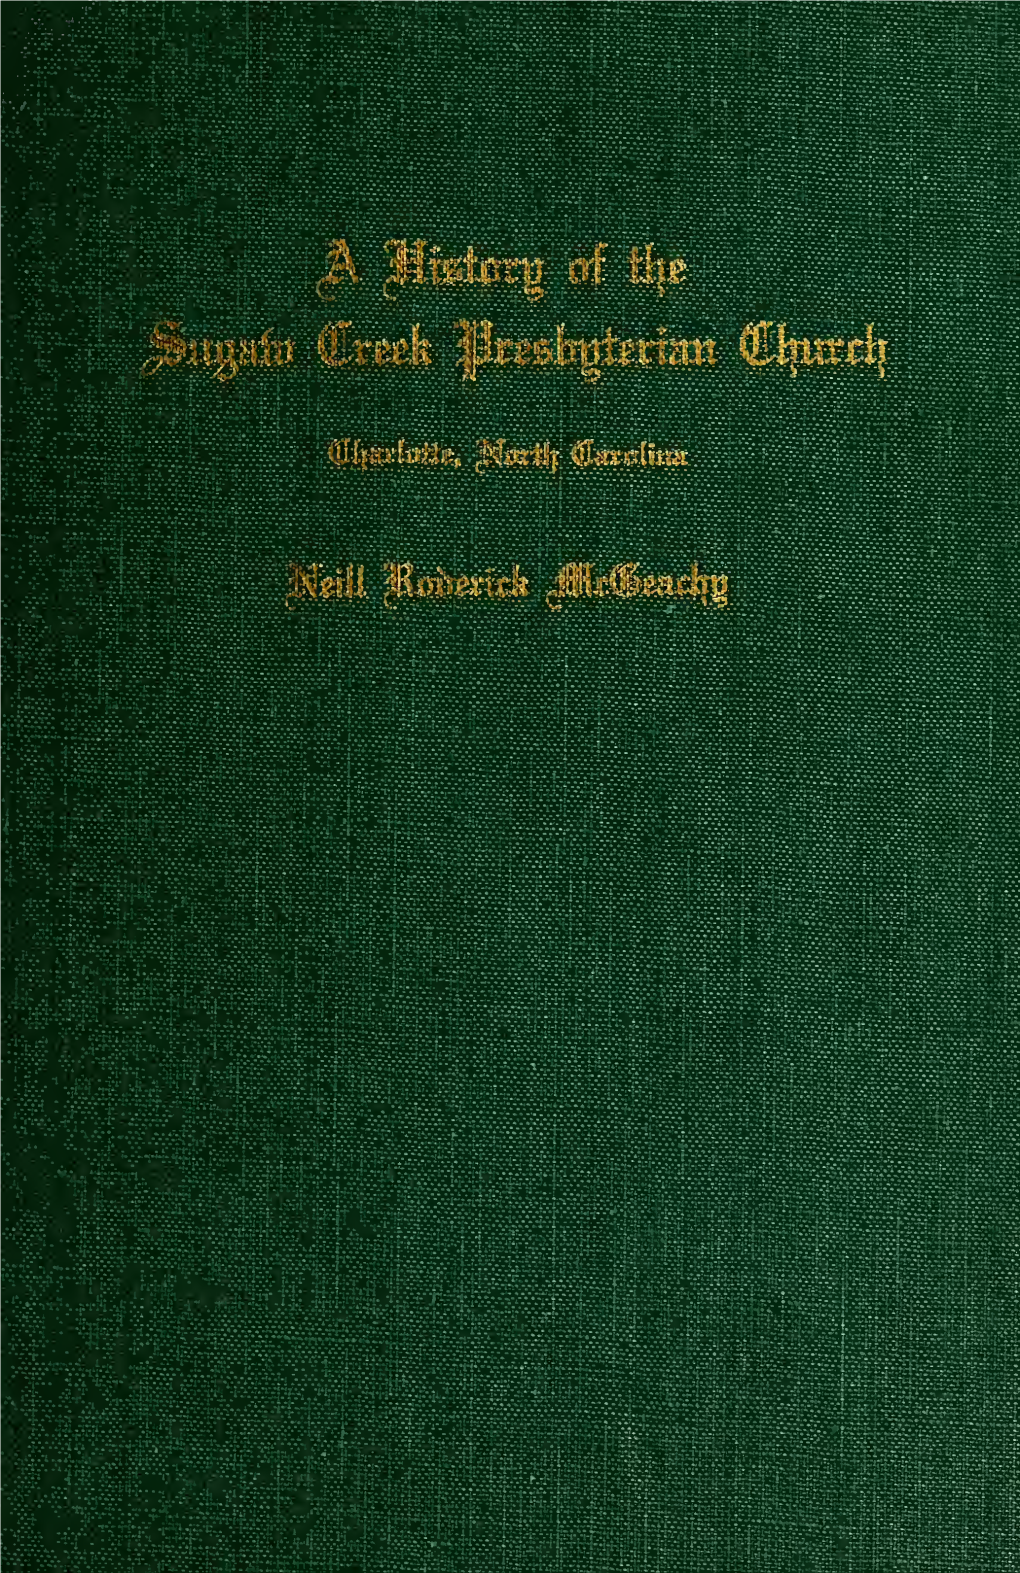 A History of the Sugaw Creek Presbyterian Church 65